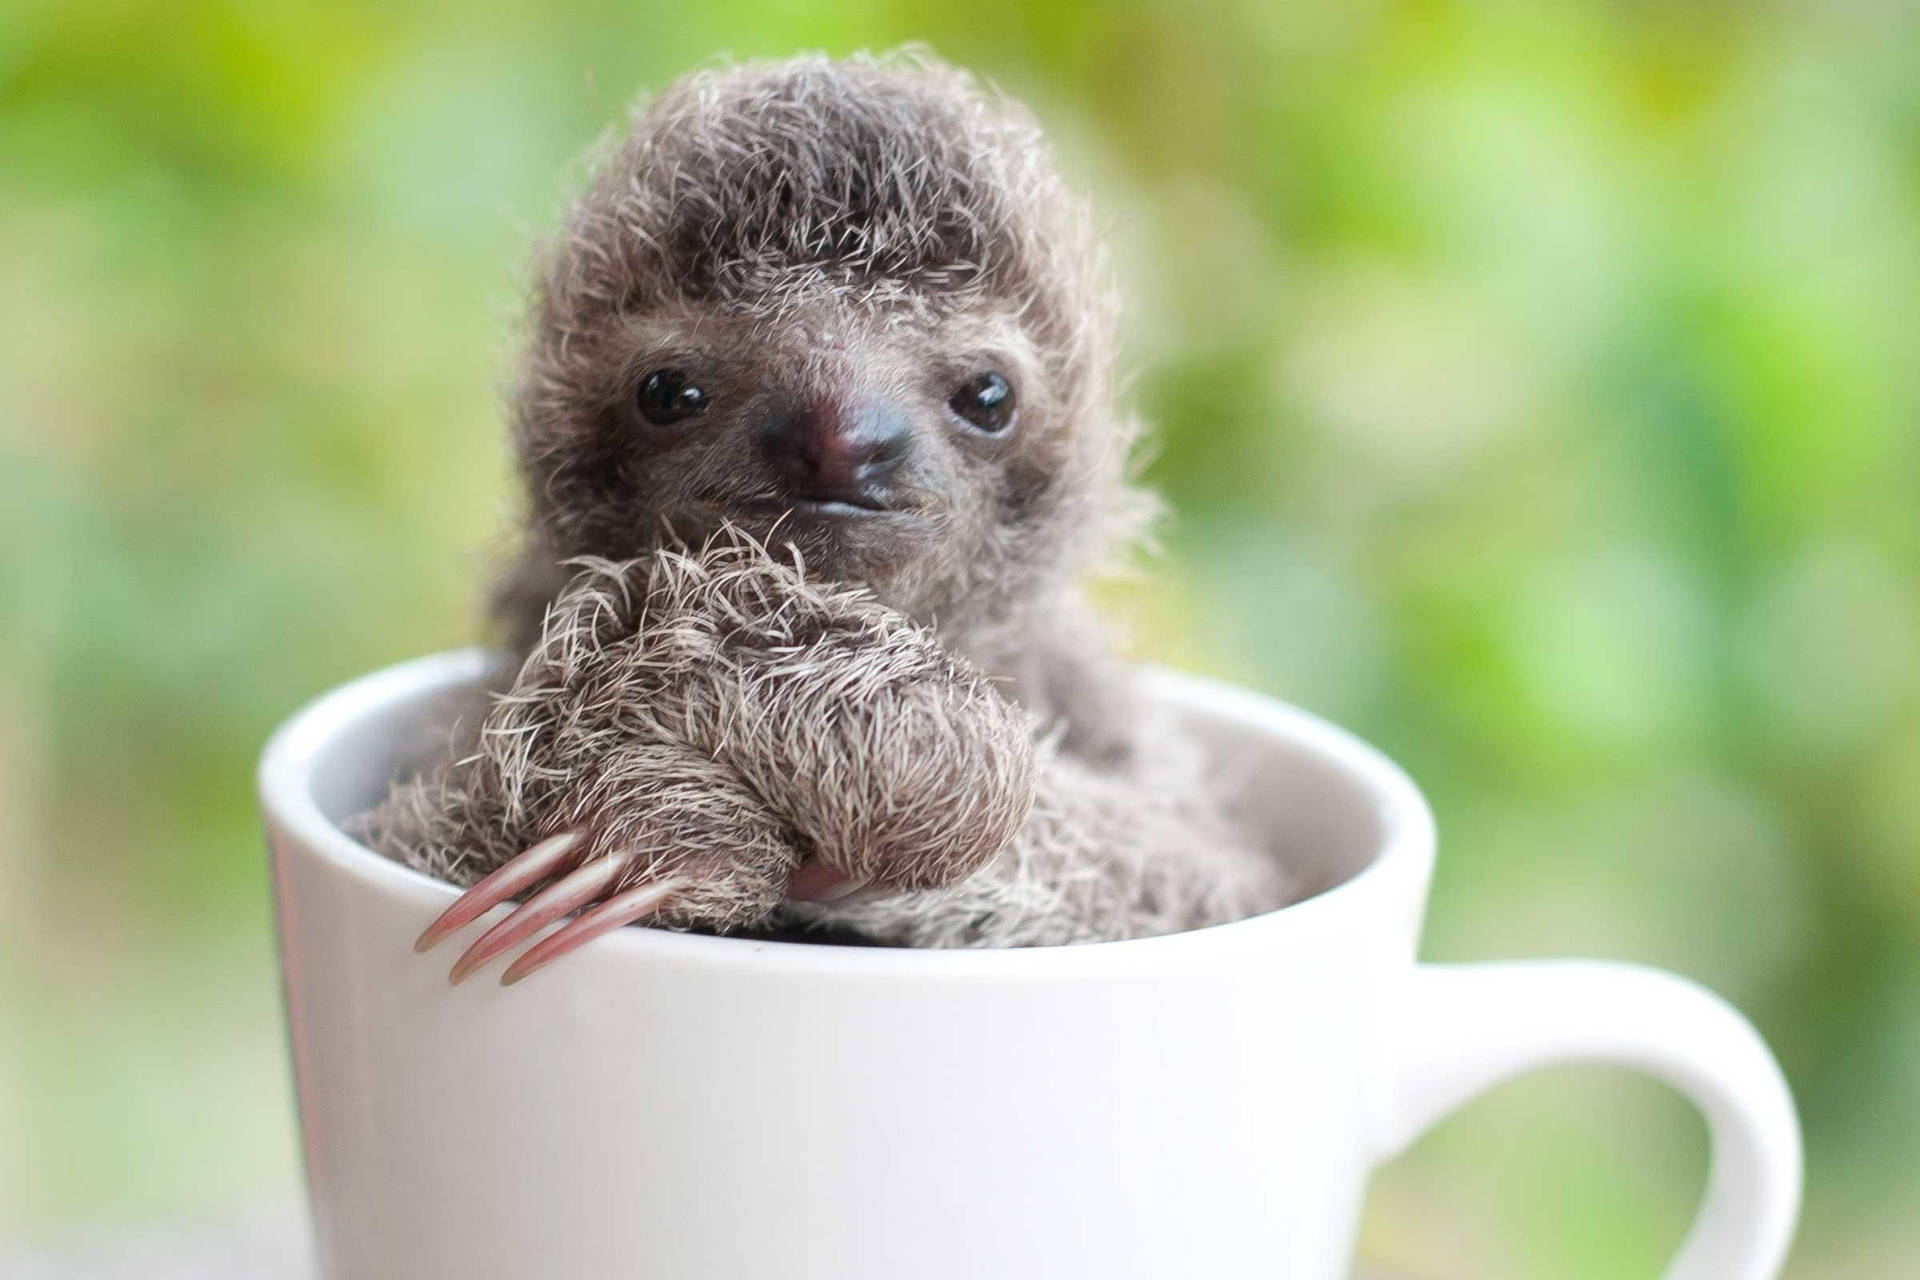 Baby Sloth In A Mug